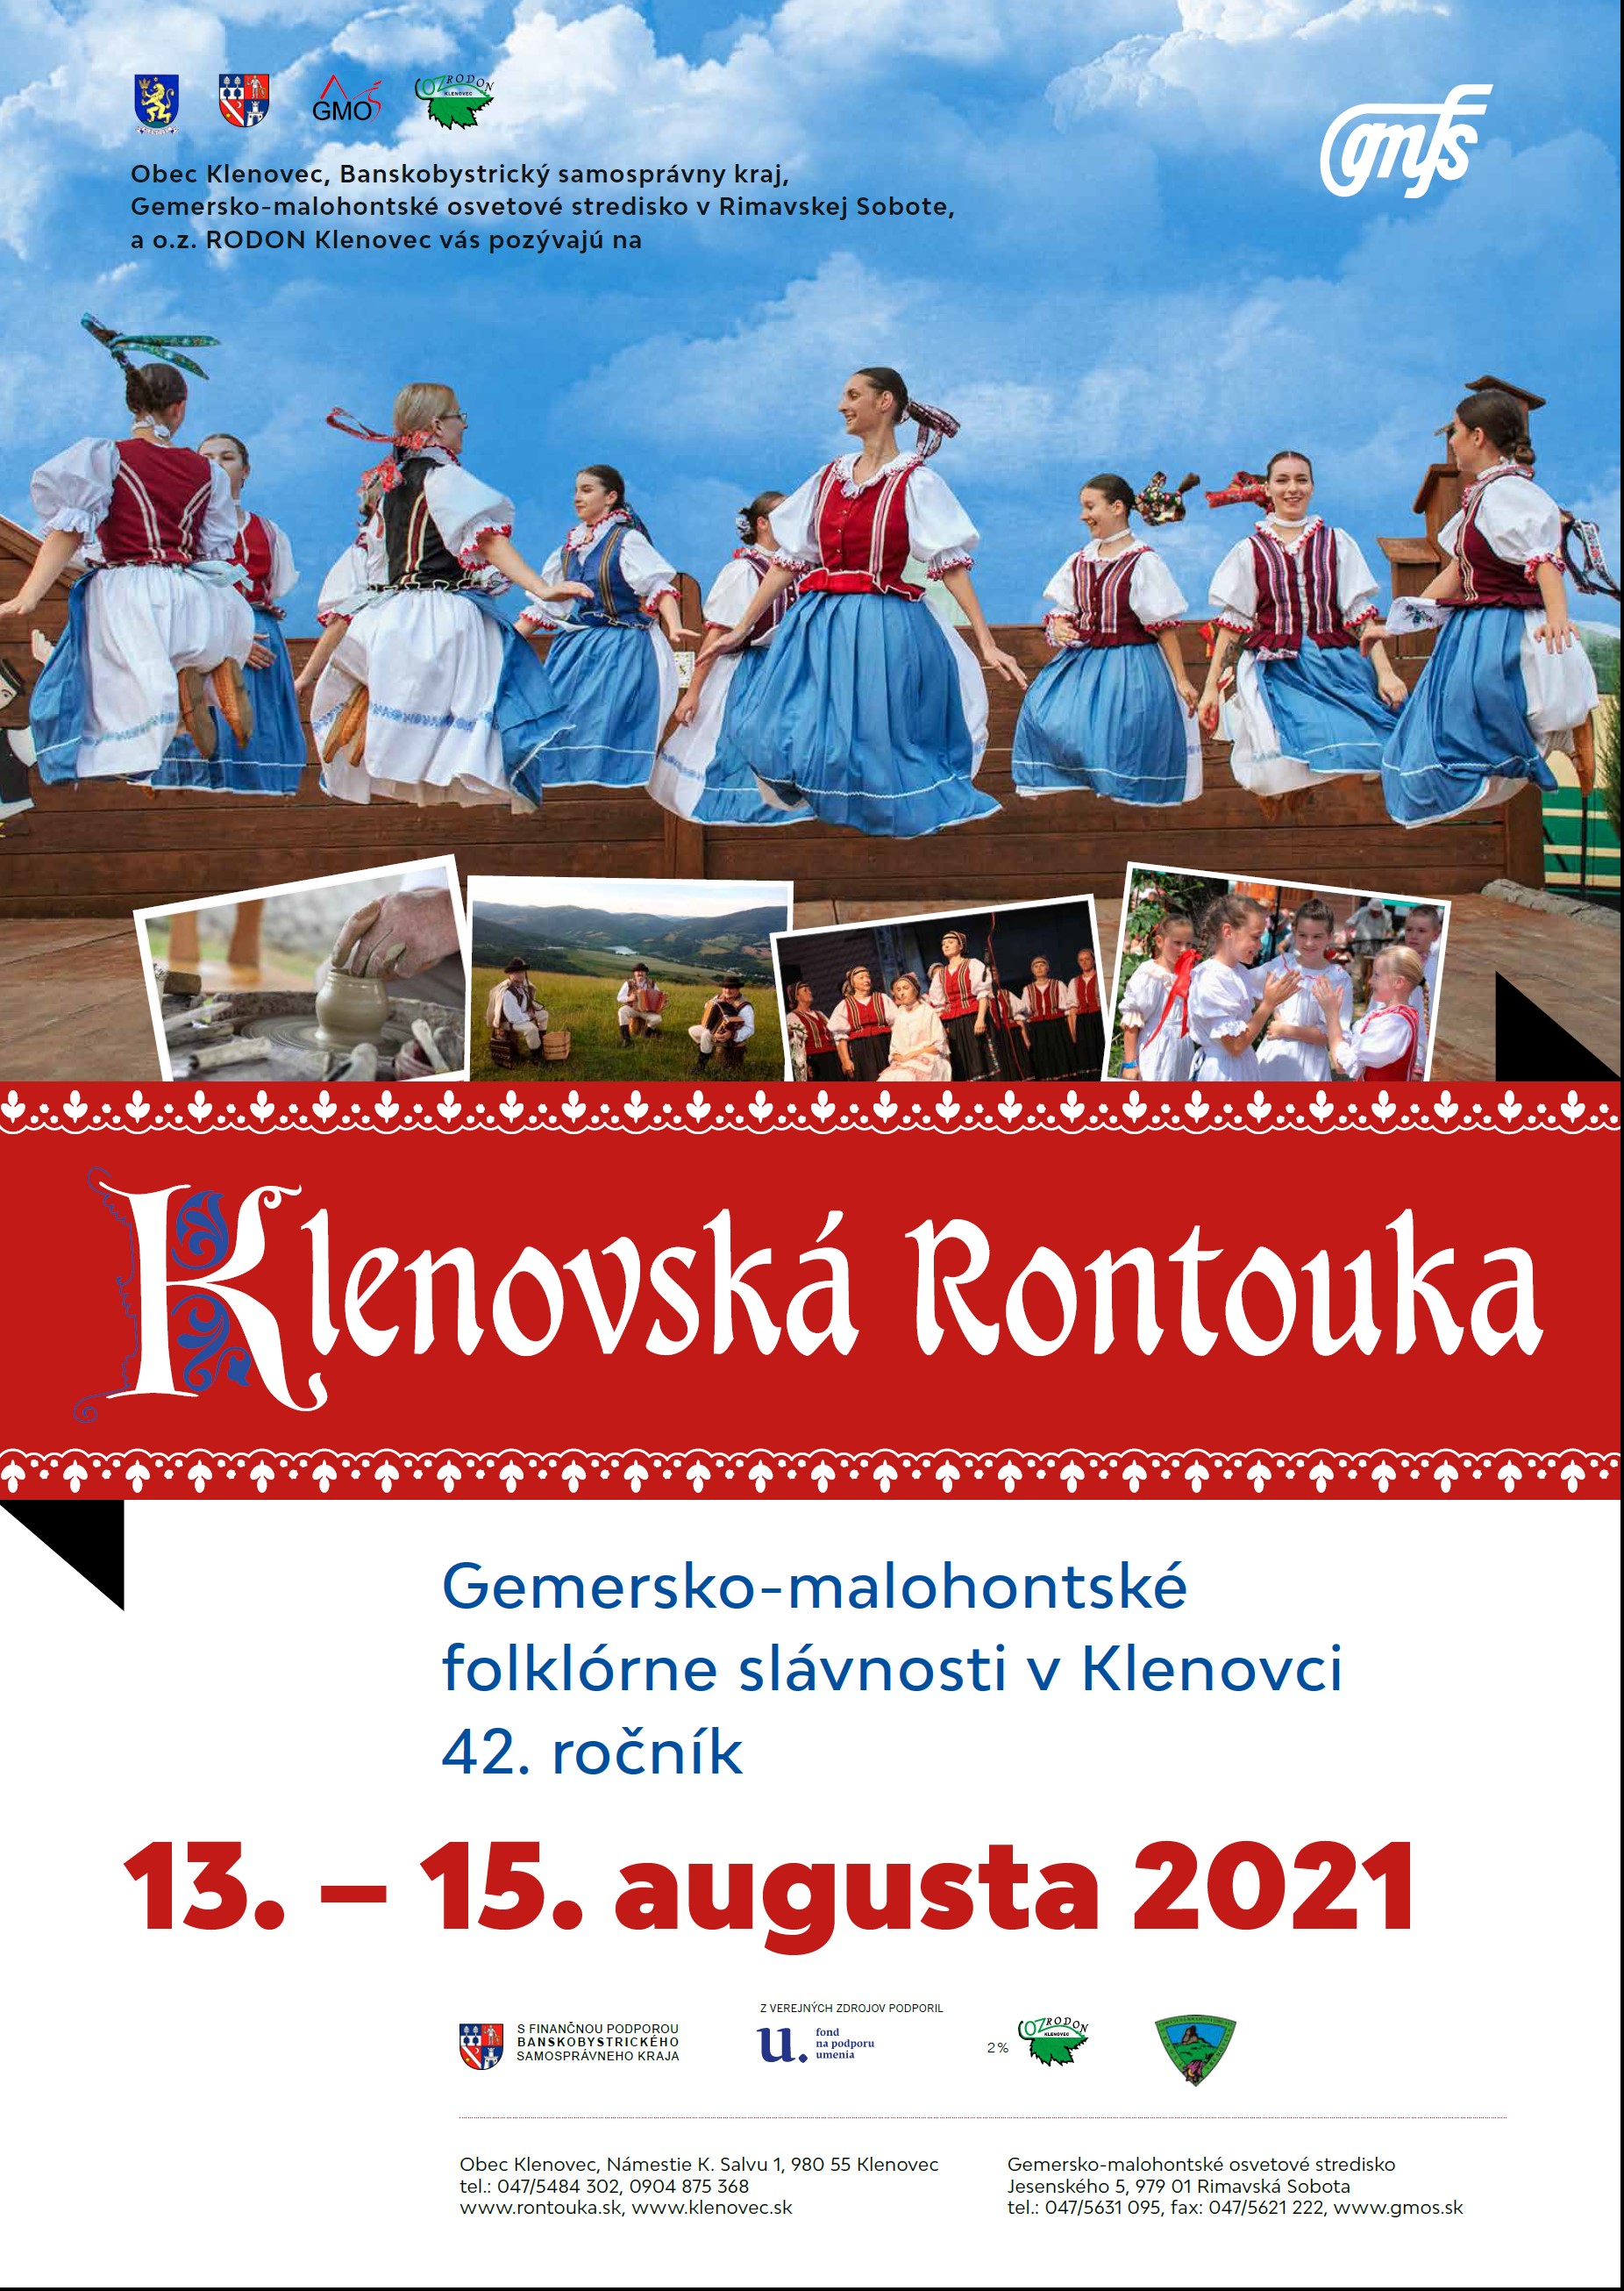 NOV - - - Klenovsk Rontouka 2021 Klenovec - 42. ronk 